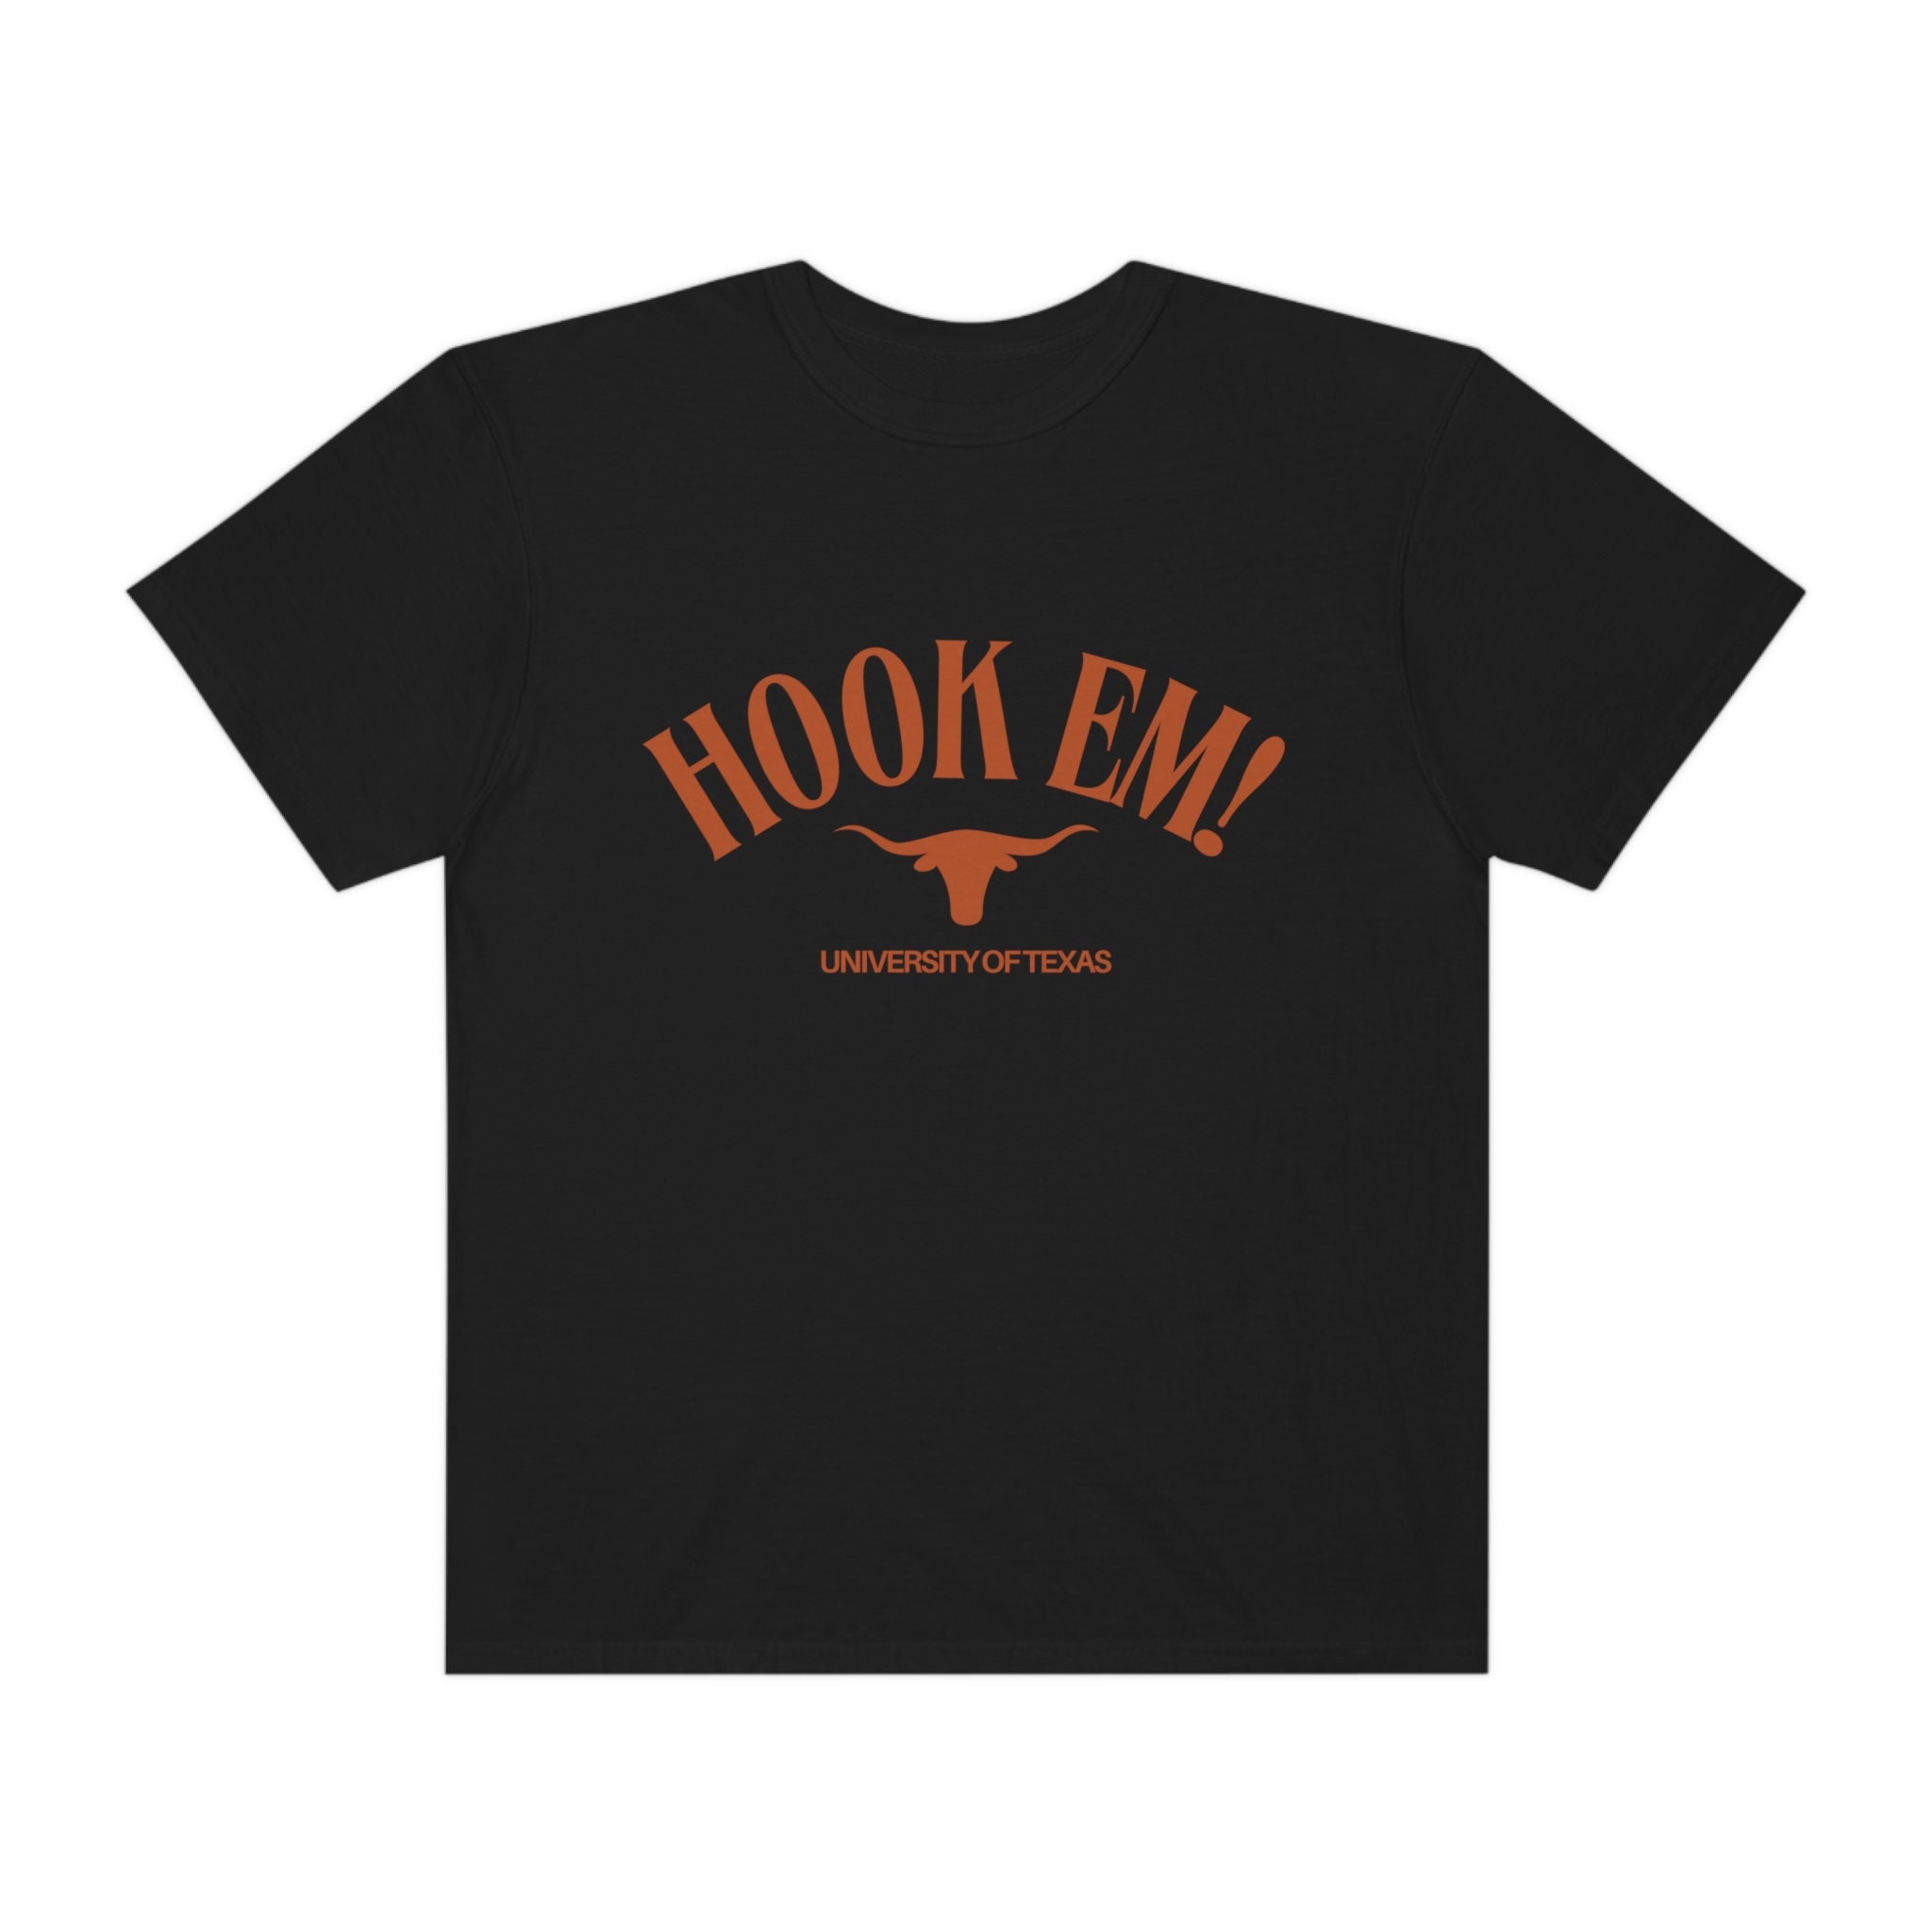 Hook Em! - University of Texas Unisex Comfort Colors T-Shirt, UT Austin, Longhorns Football, Vintage Retro College Football Tee, Orange